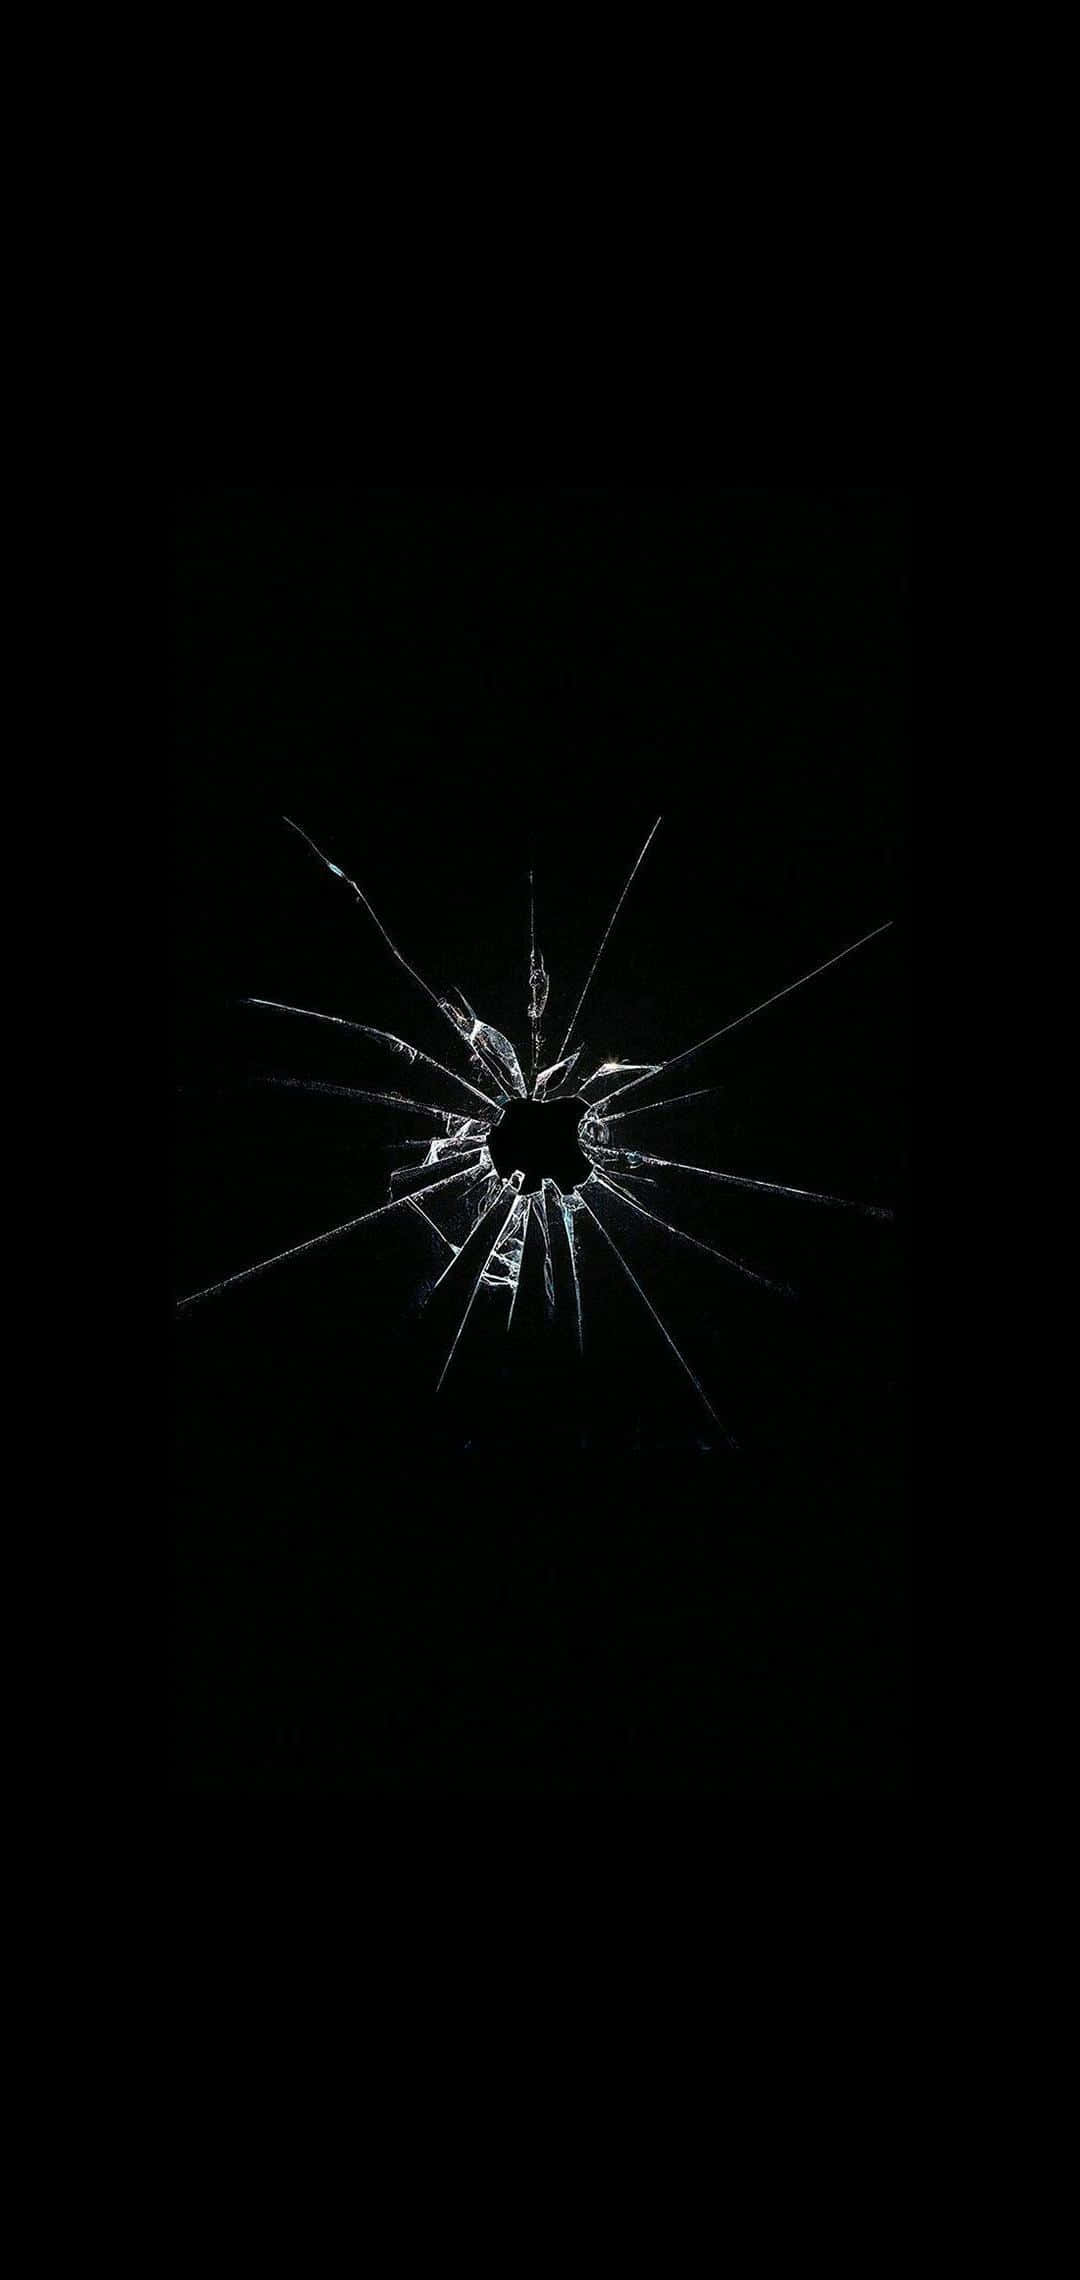 A Broken Glass On A Black Background